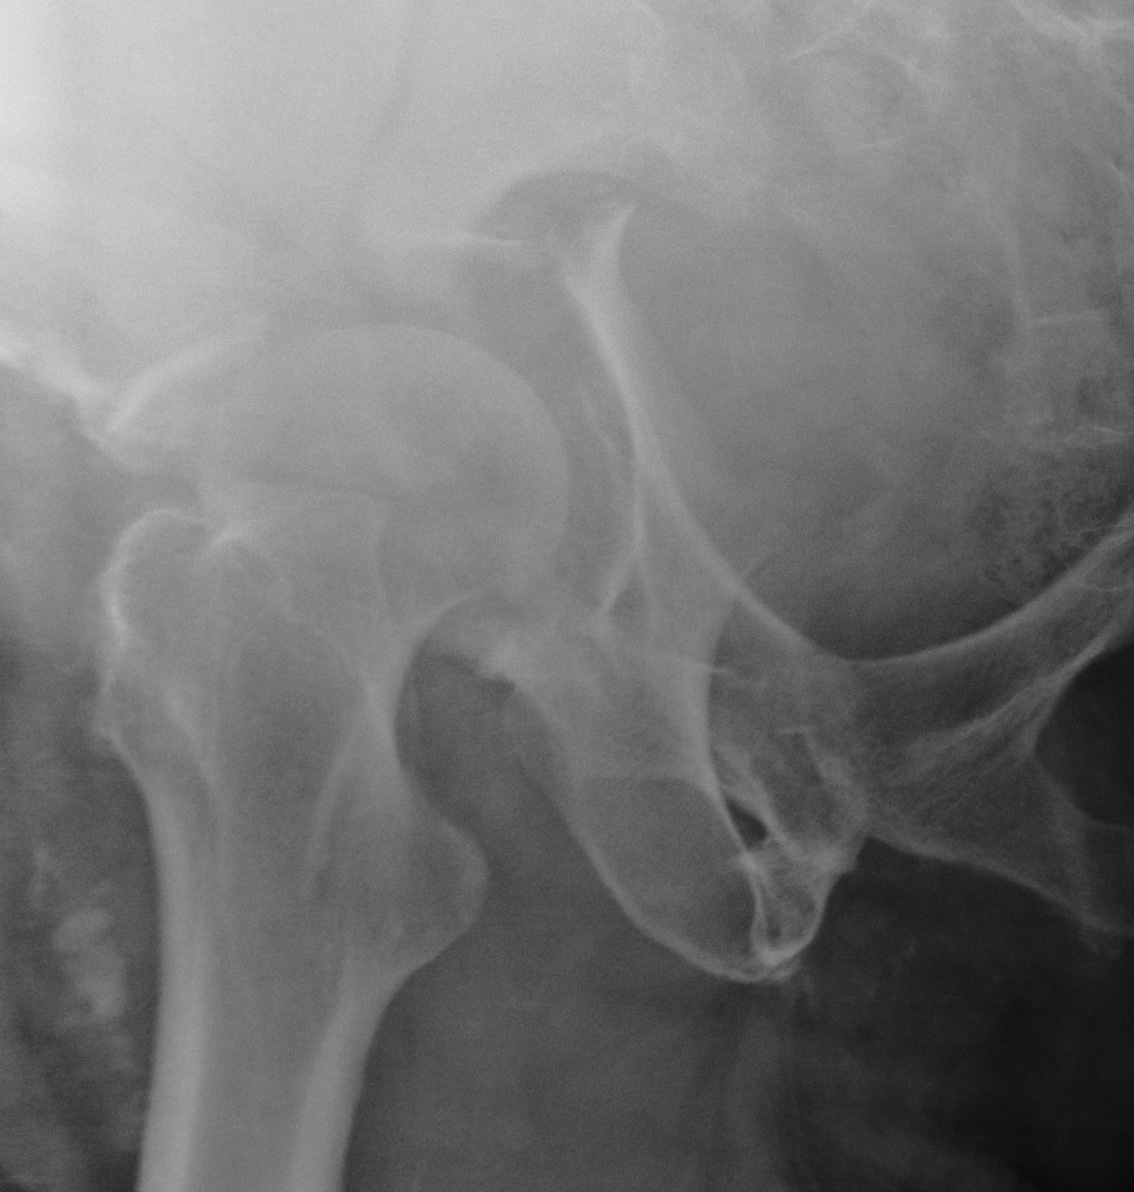 Acetabular Fracture Judet View